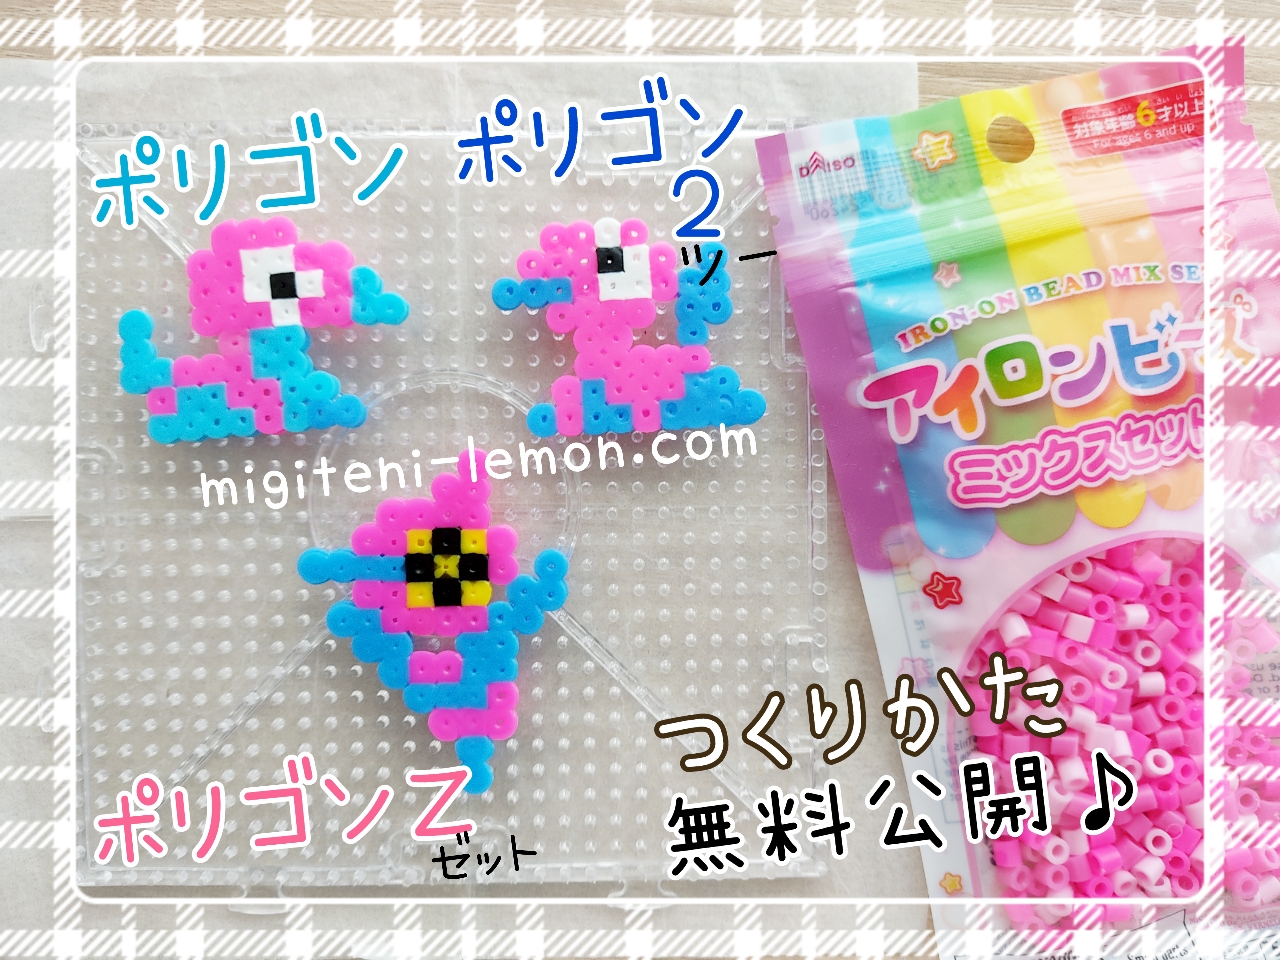 porigon-porygon-2-z-beads-daiso-handmade-free-pokemon